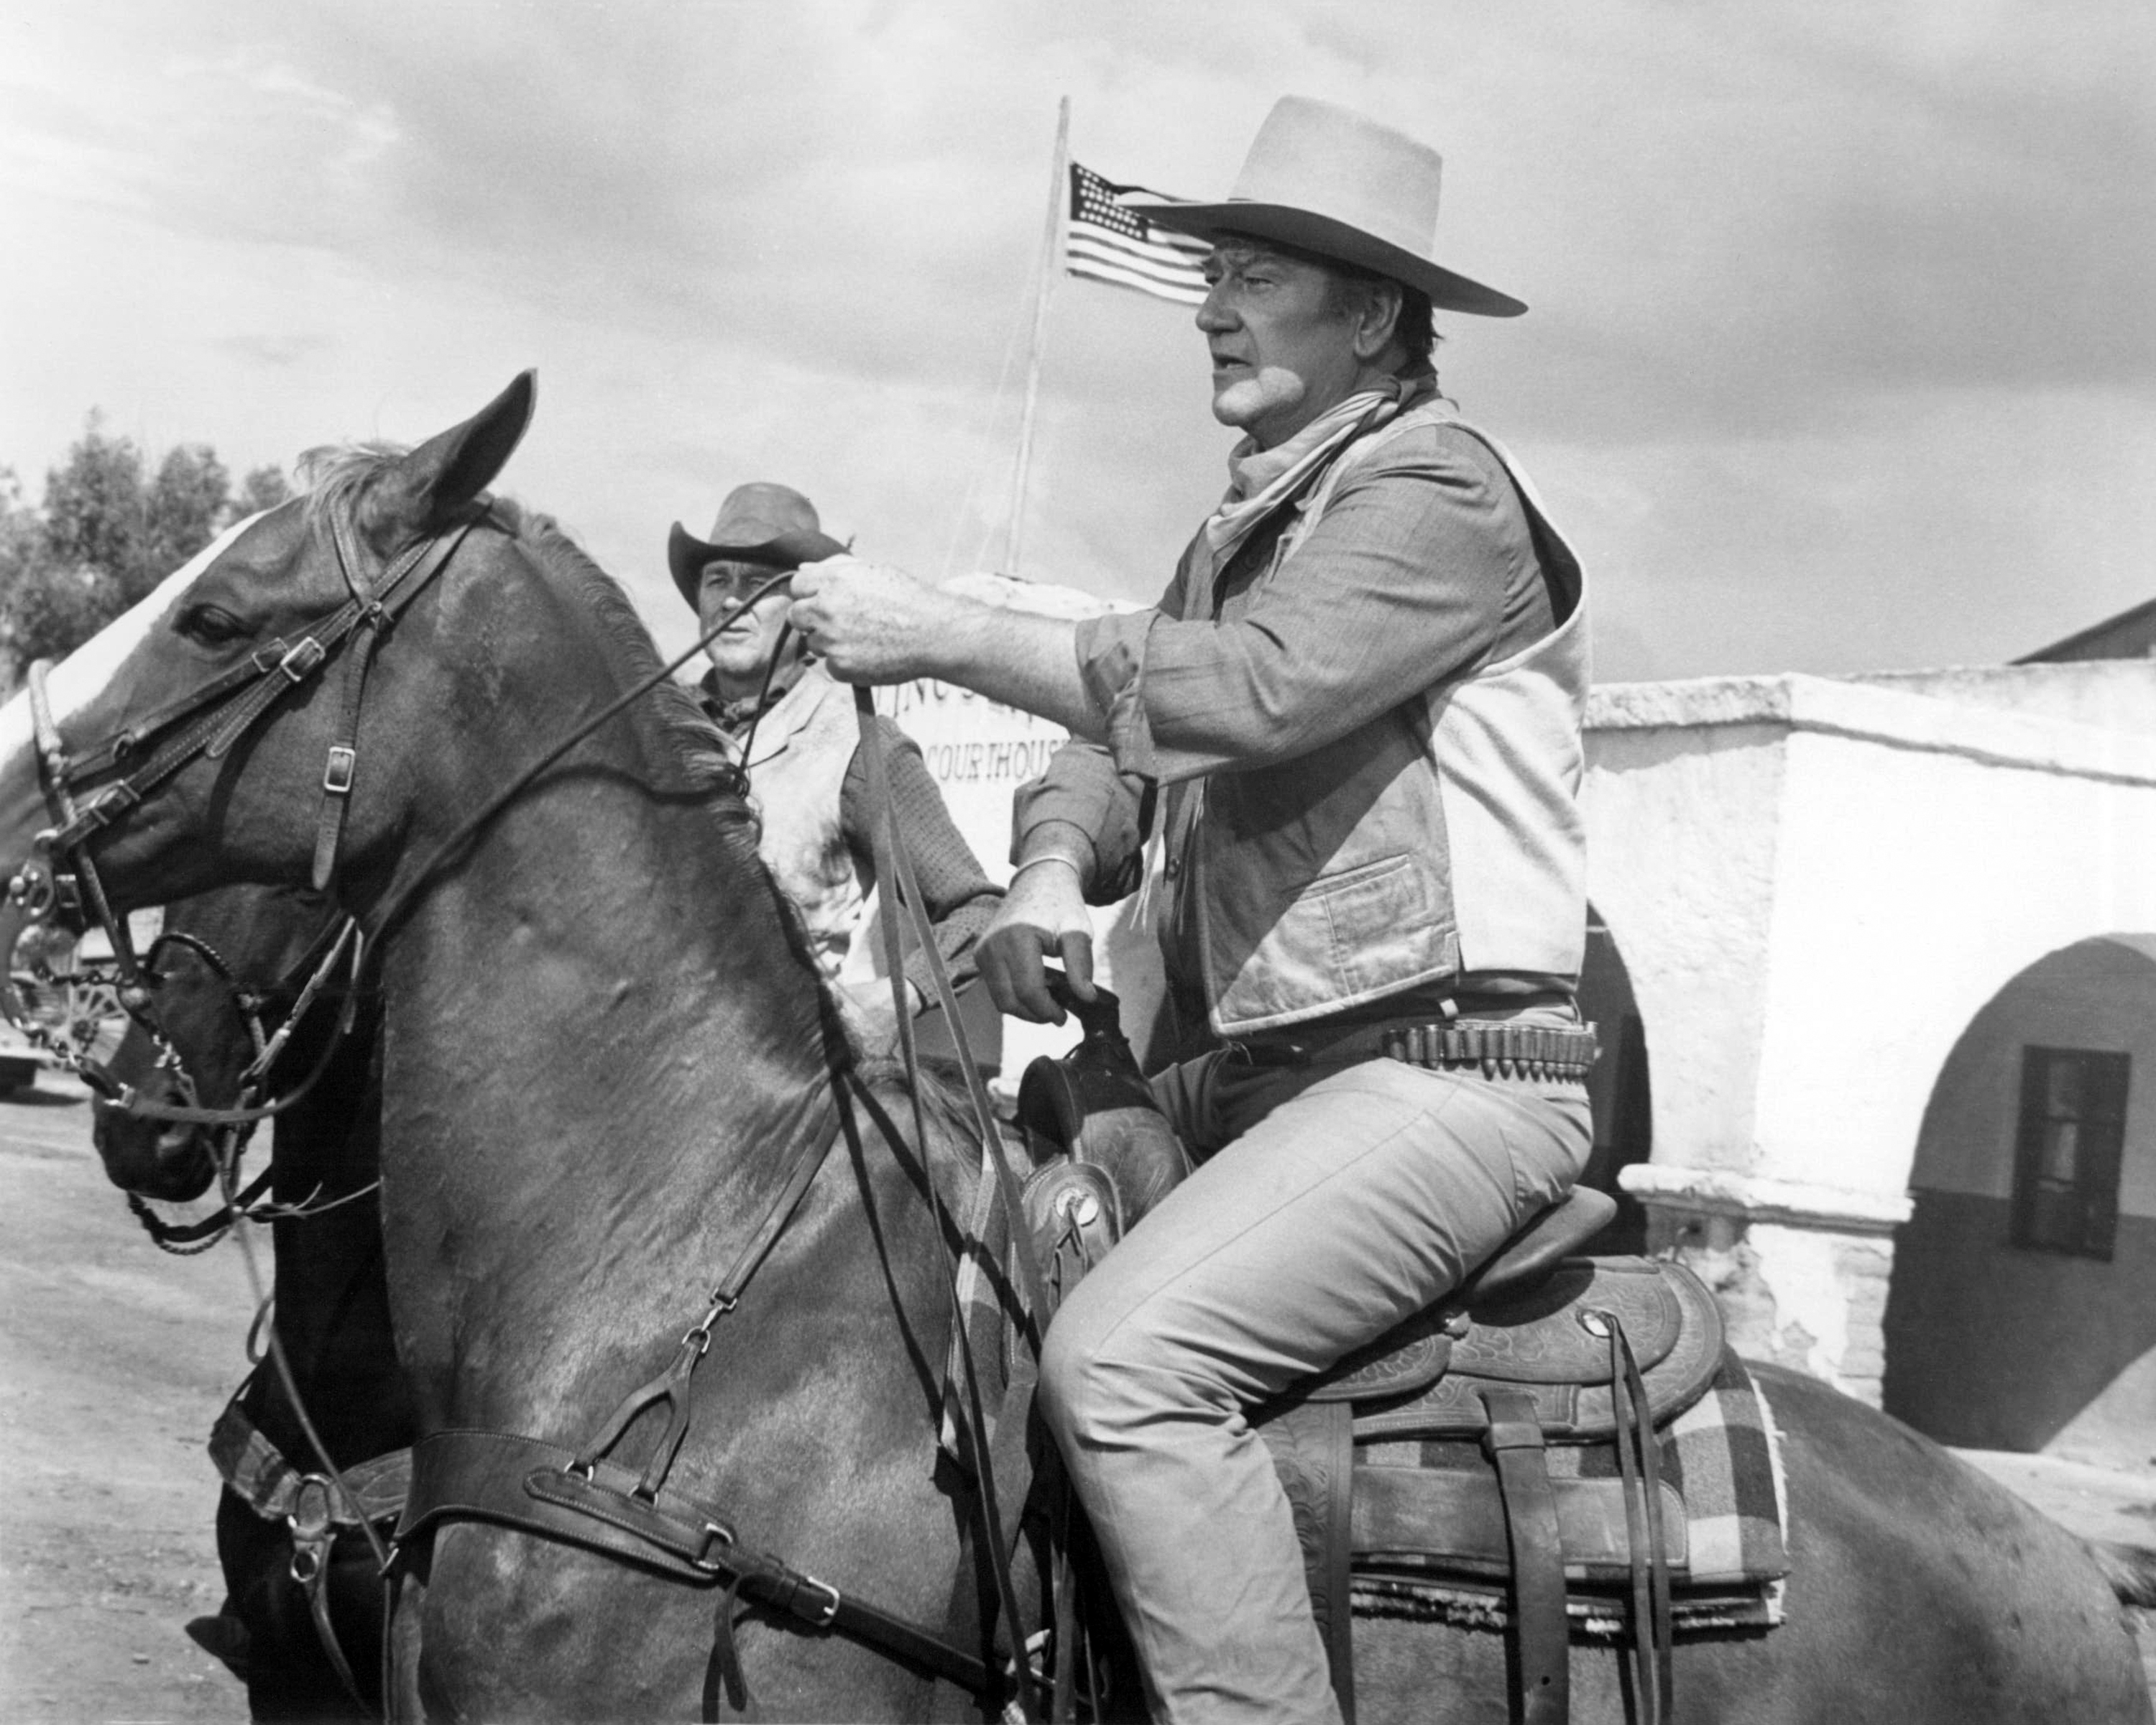 John Wayne on horseback